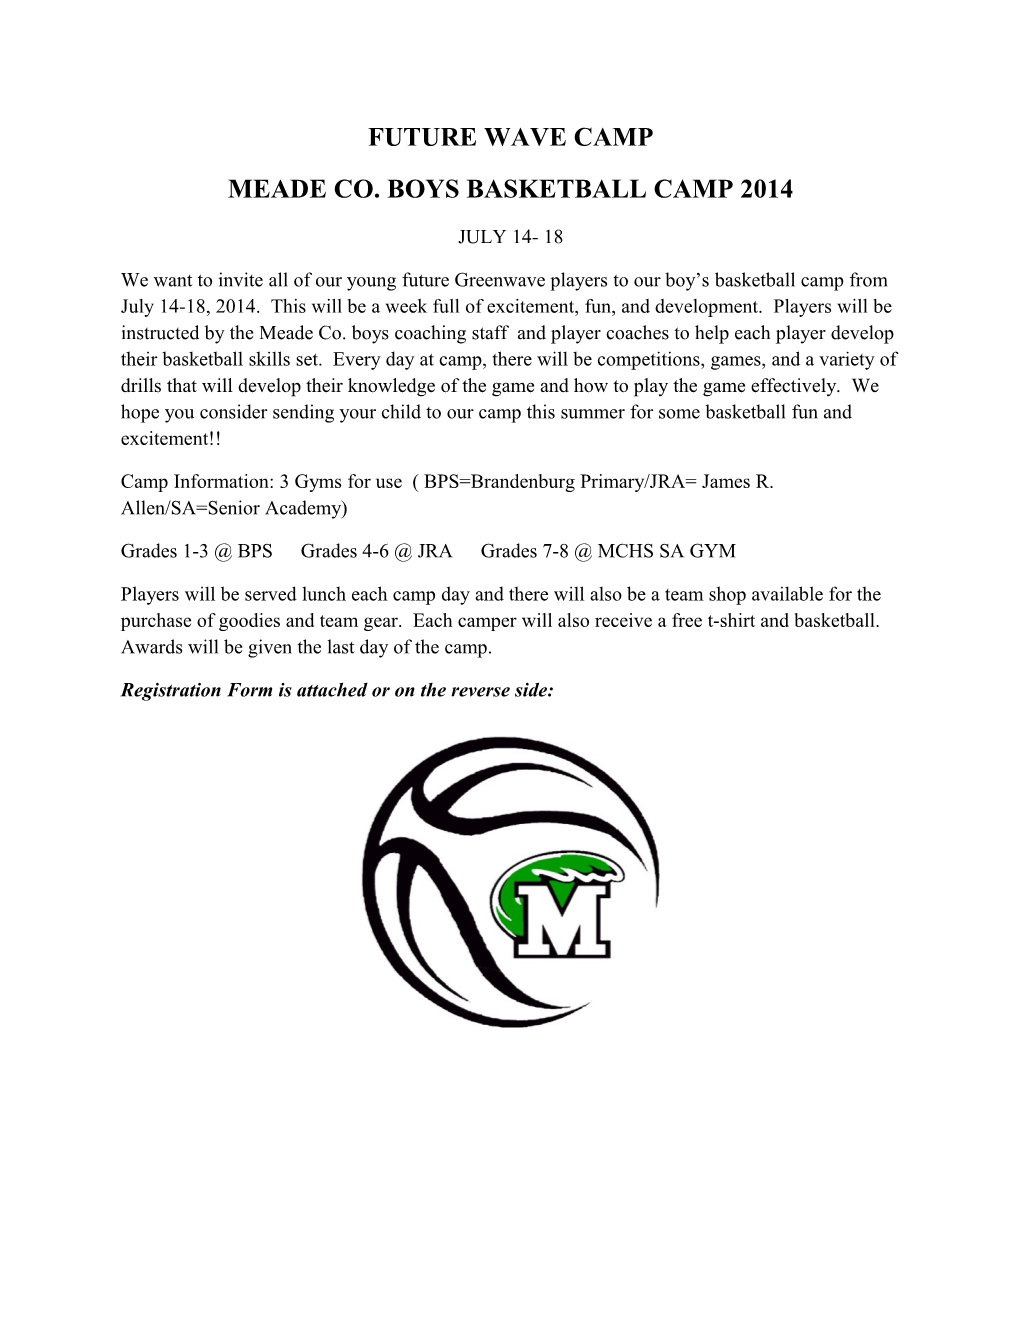 Meade Co. Boys Basketball Camp 2014